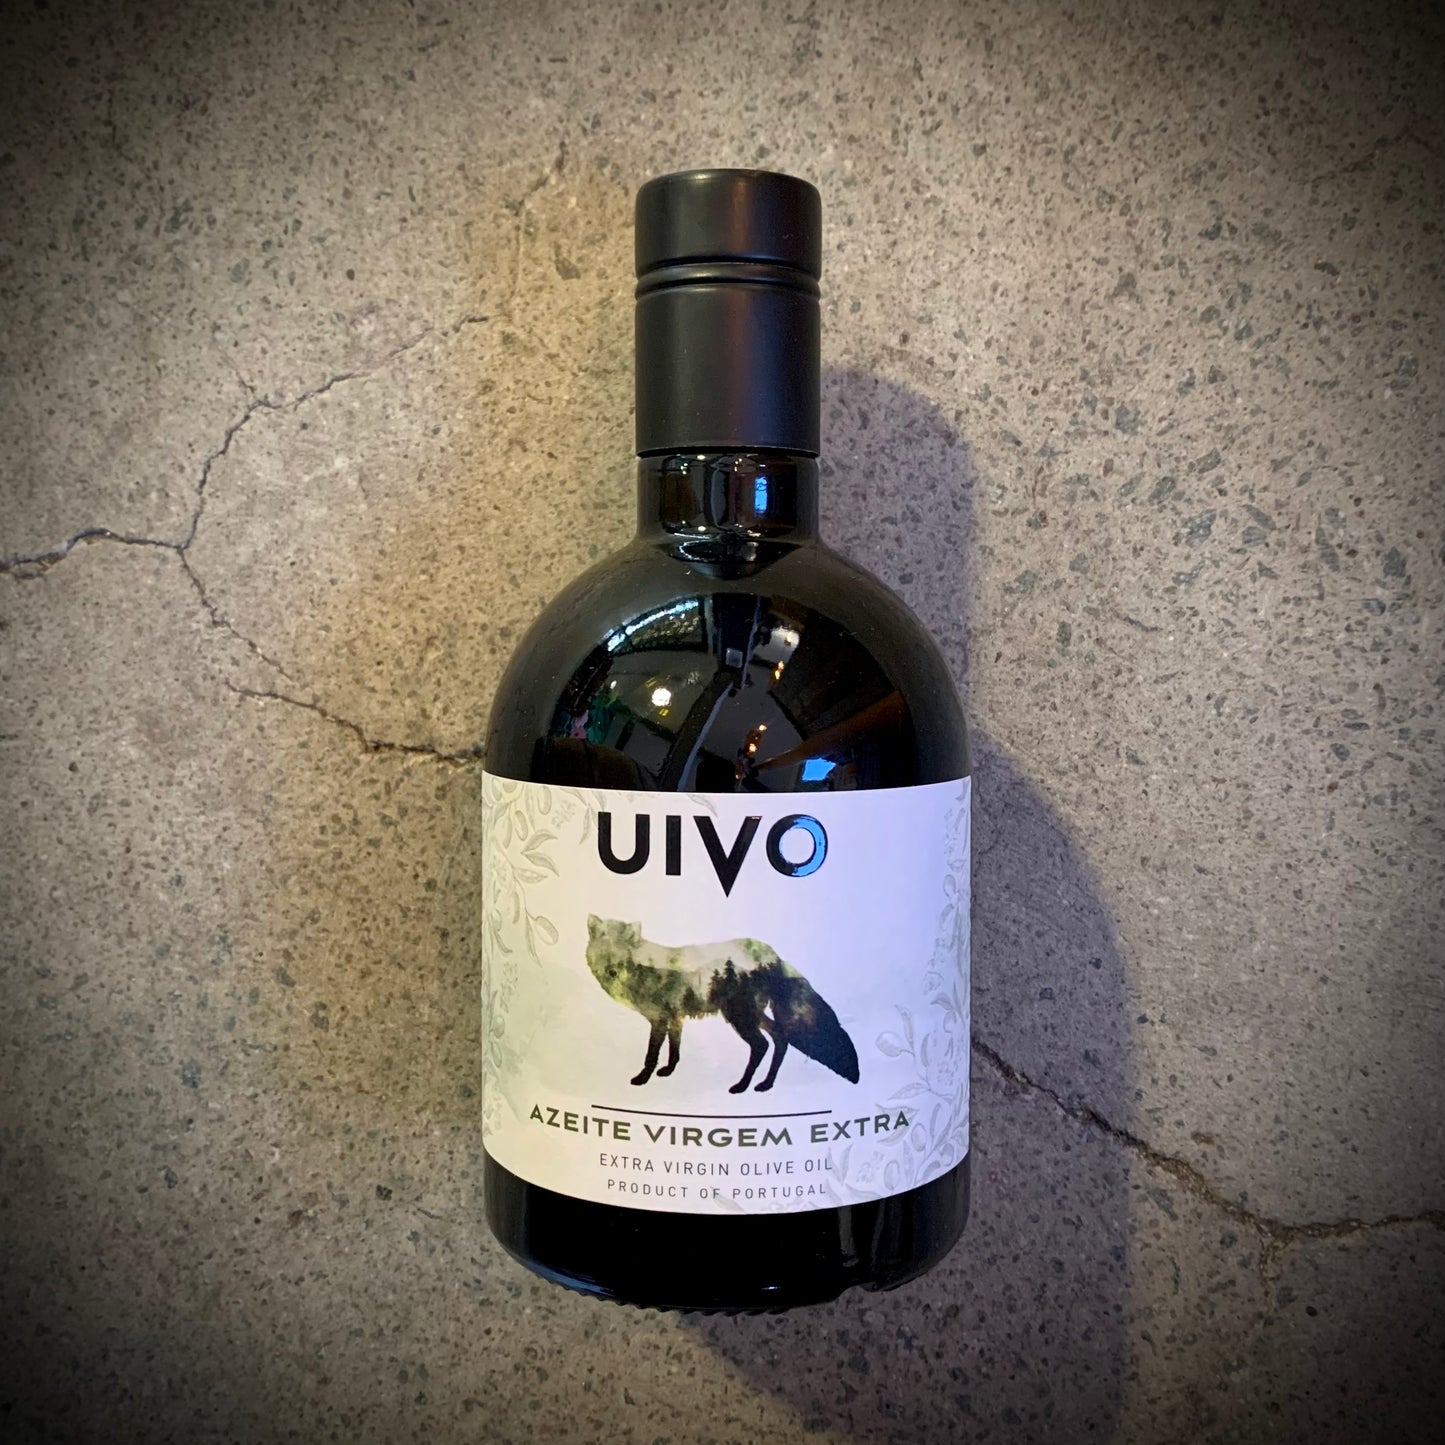 Folias De Baco, Uivo Azeite Olive Oil, Duoro, Portugal